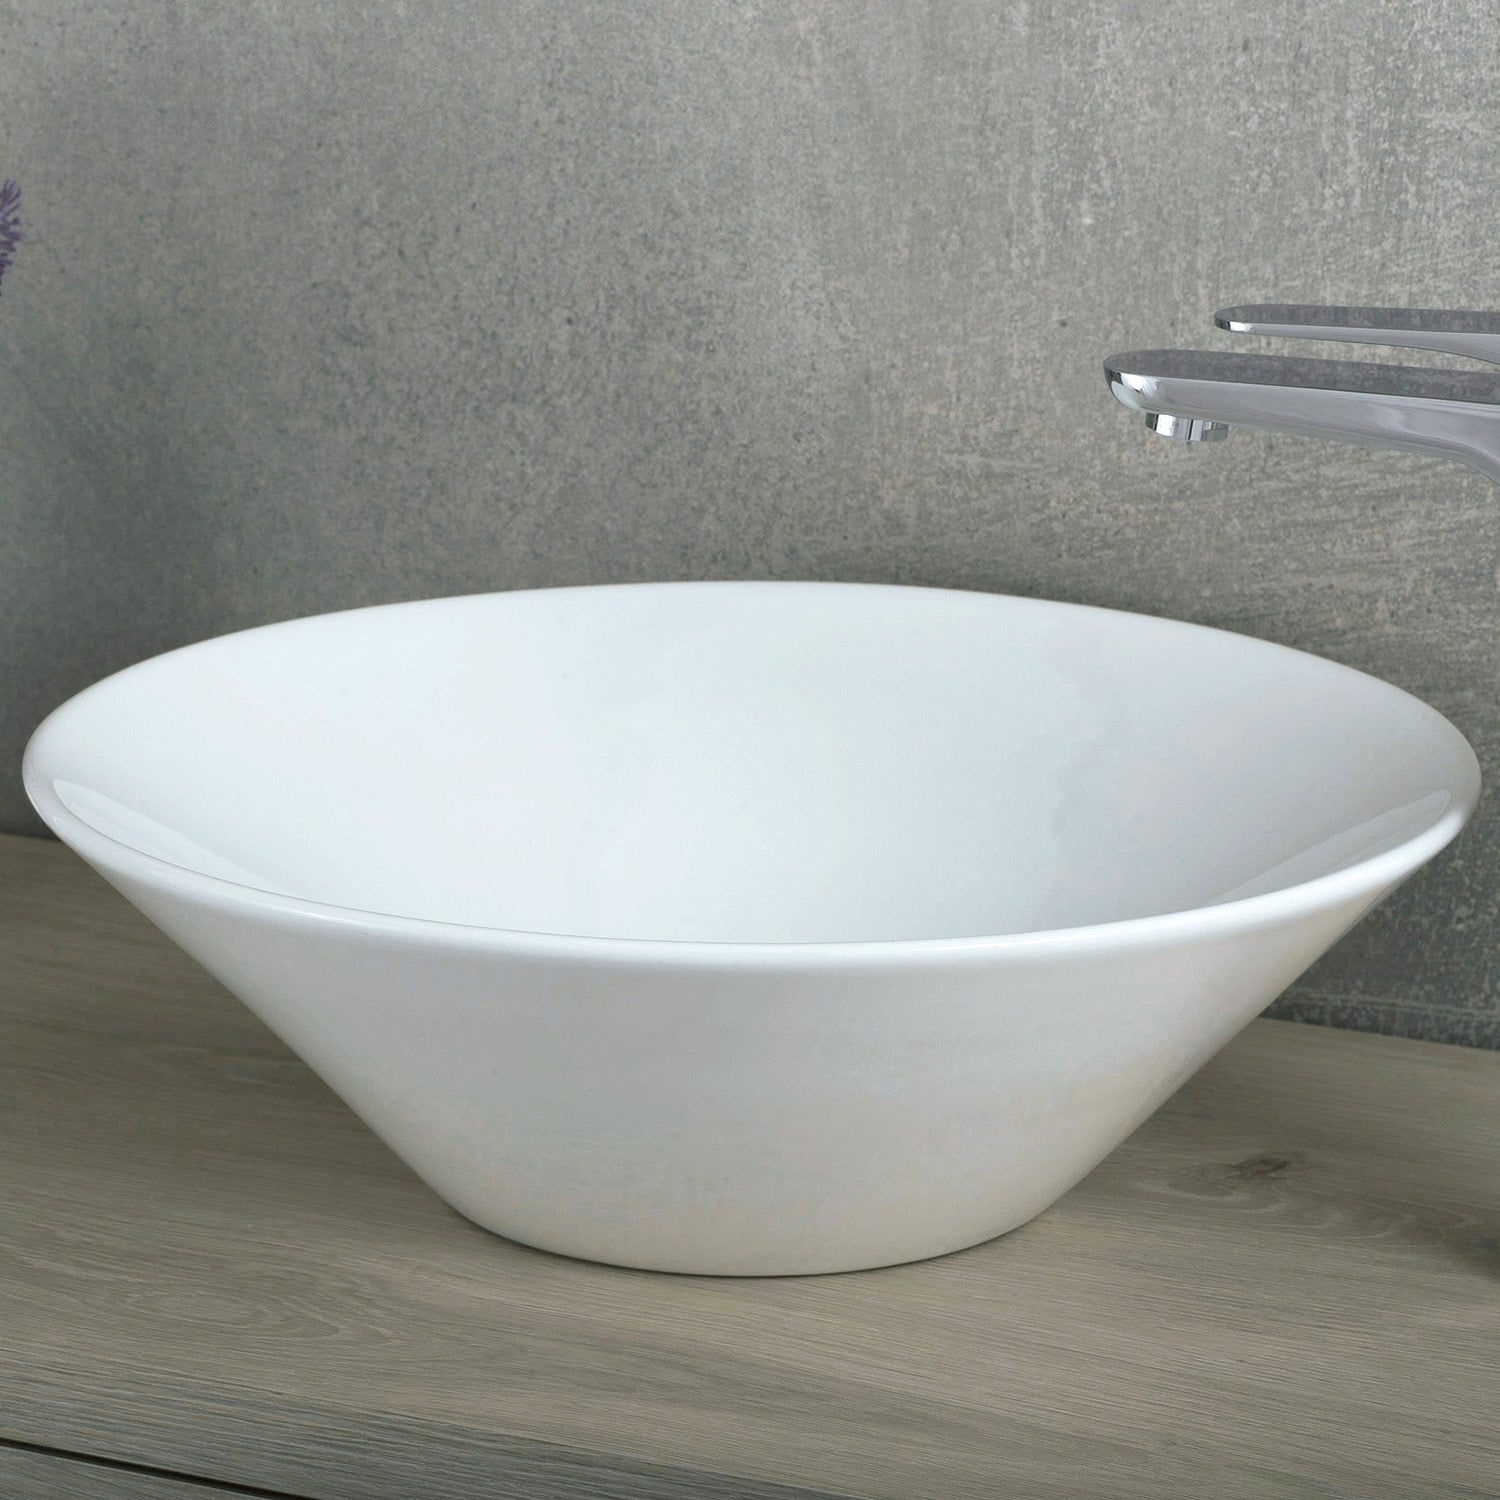 DAX Ceramic Round Single Bowl Bathroom Vessel Sink, White Finish, ?ò 17 x 5-1/2 Inches (BSN-234)